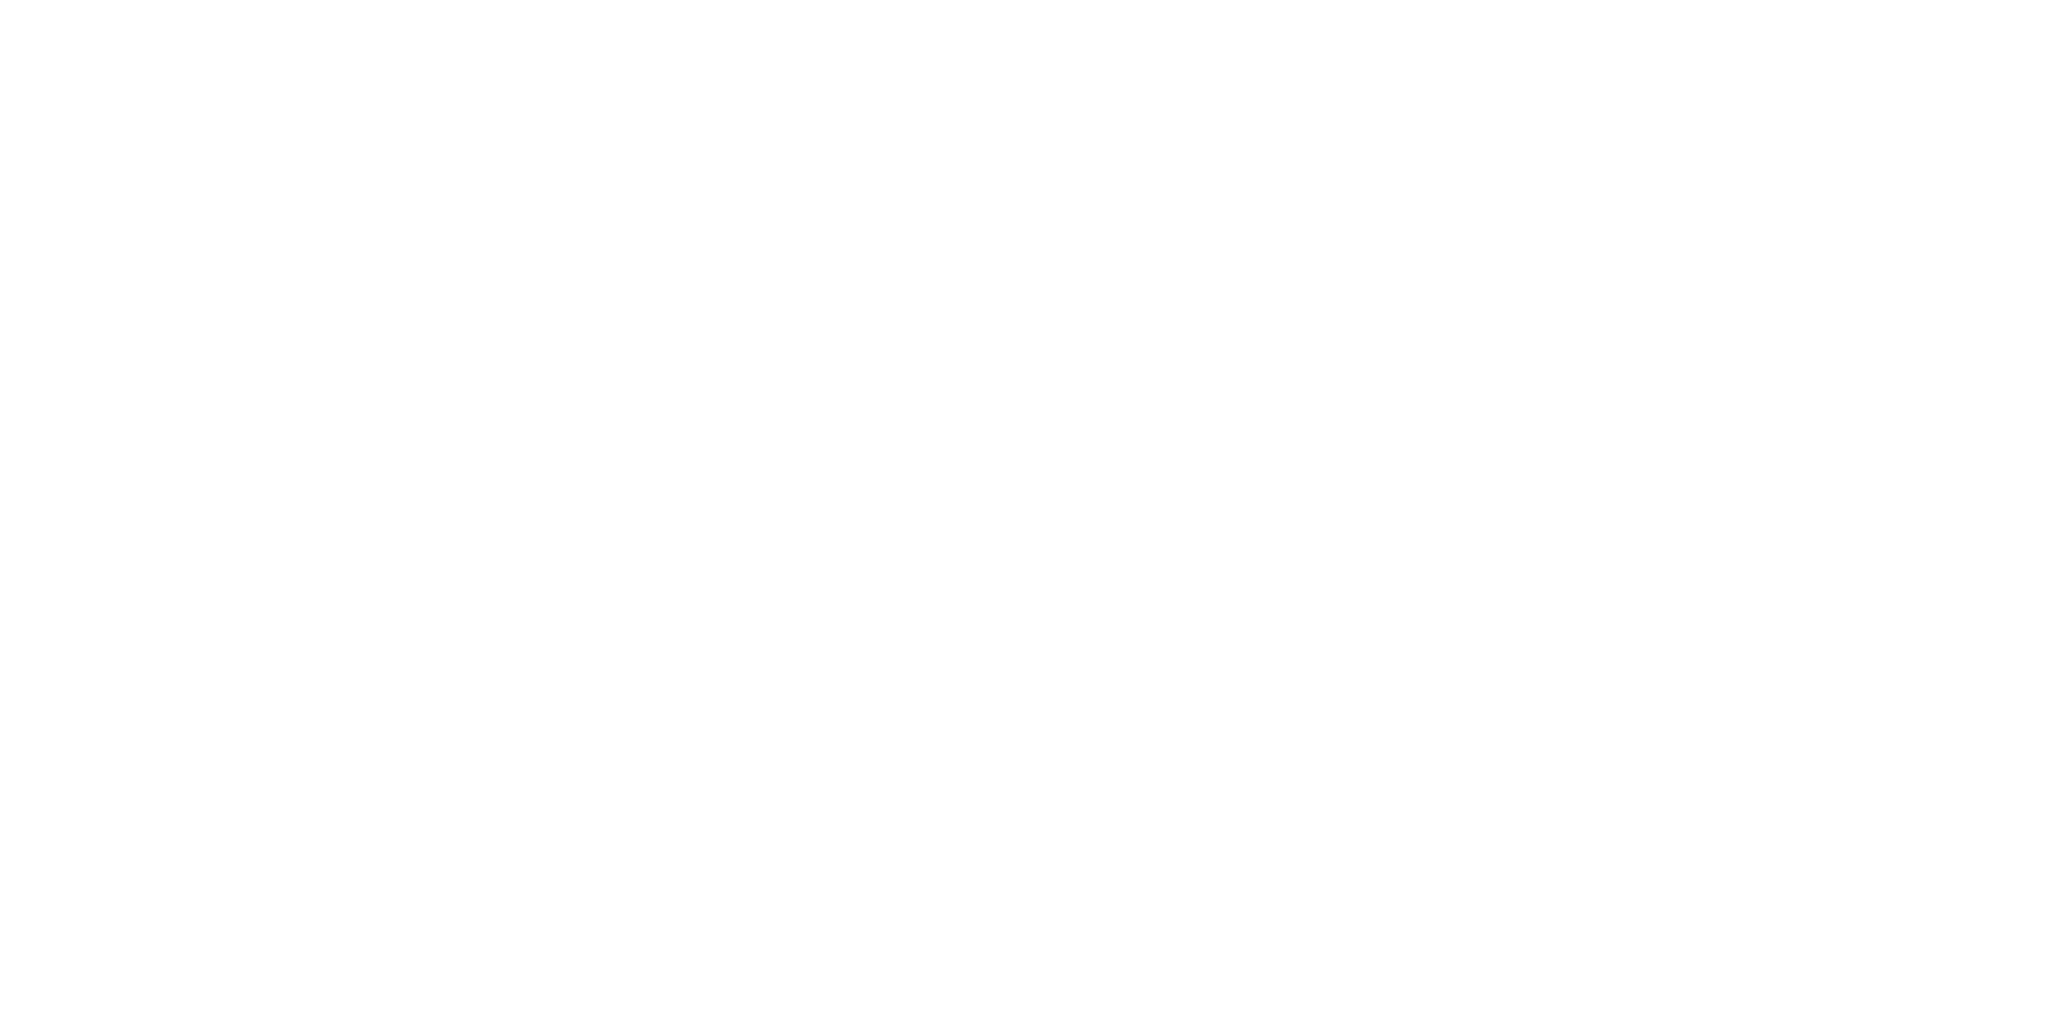 Precision Service Pros white logo<br />
